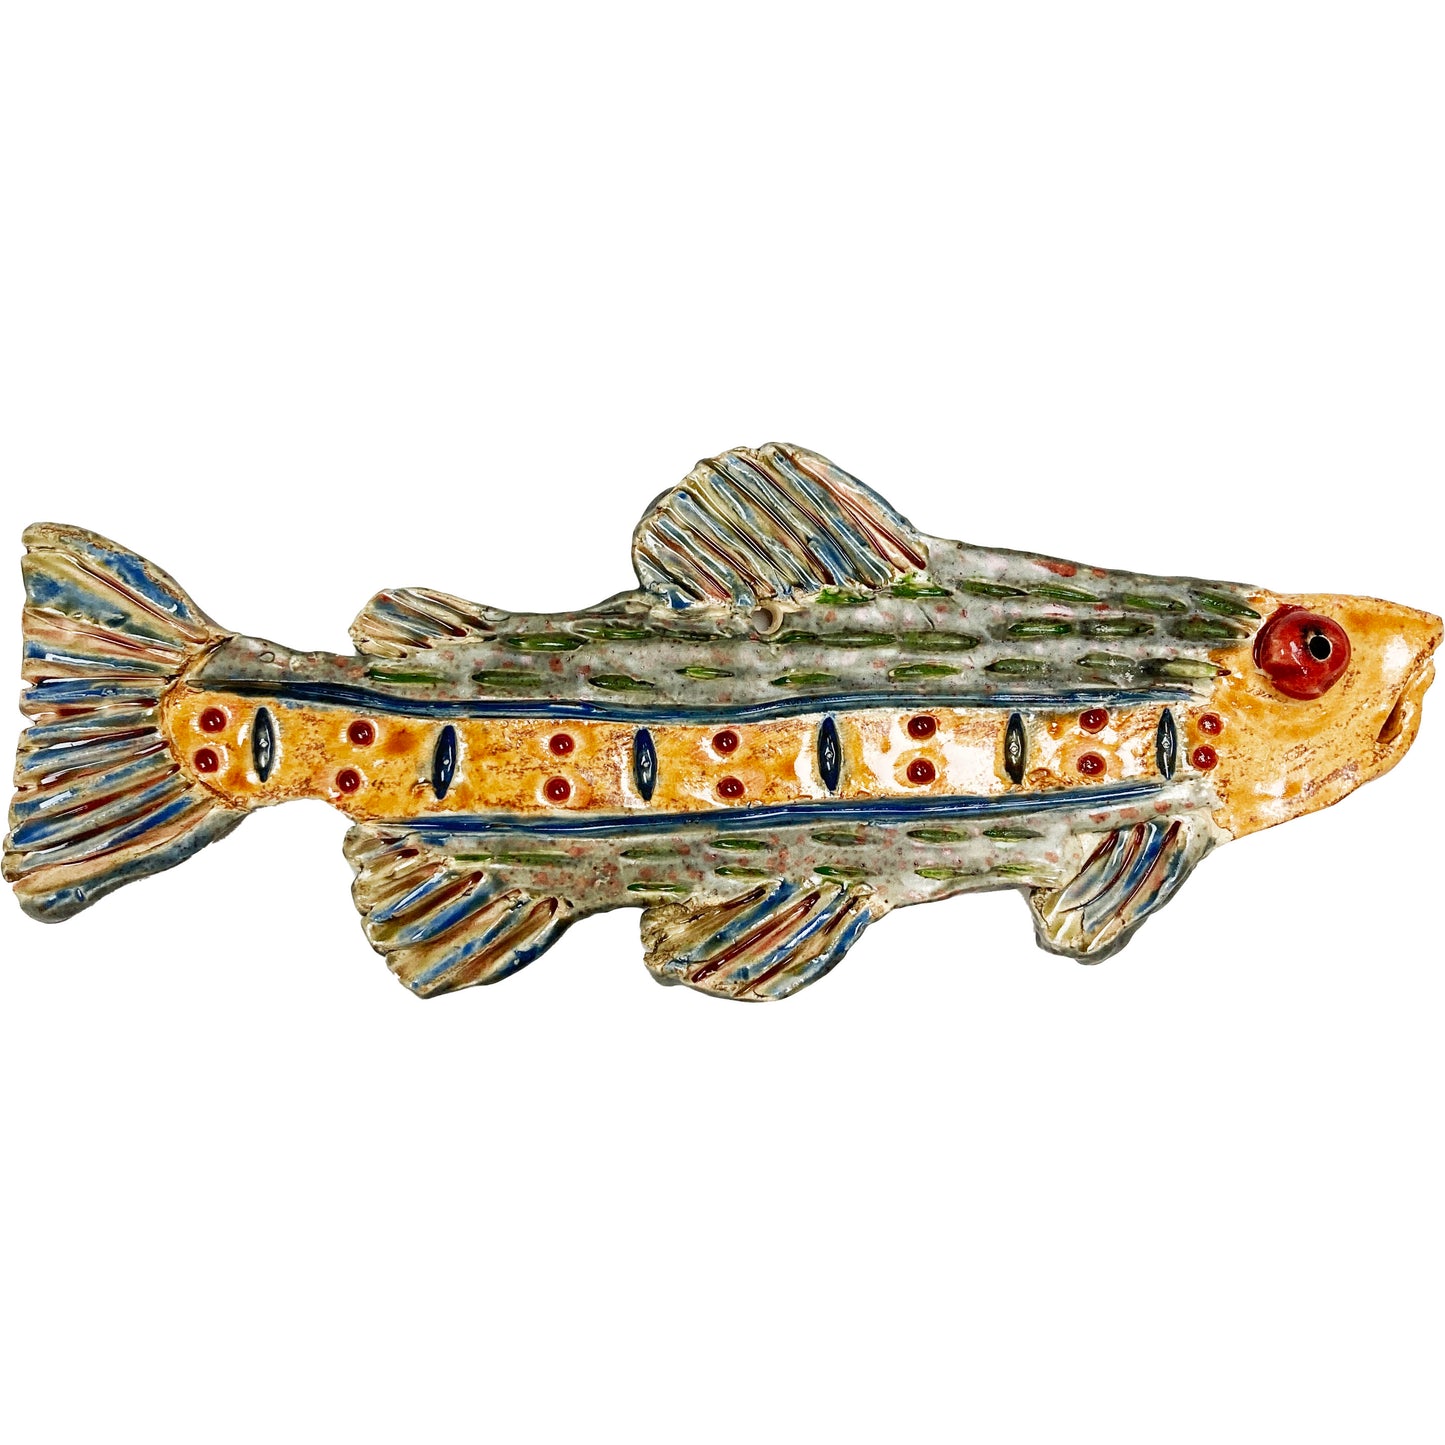 WATCH Resources Art Guild - Ceramic Arts Handmade Clay Crafts Fresh Fish 8-inch x 3-inch Glazed made by Morgan Fox